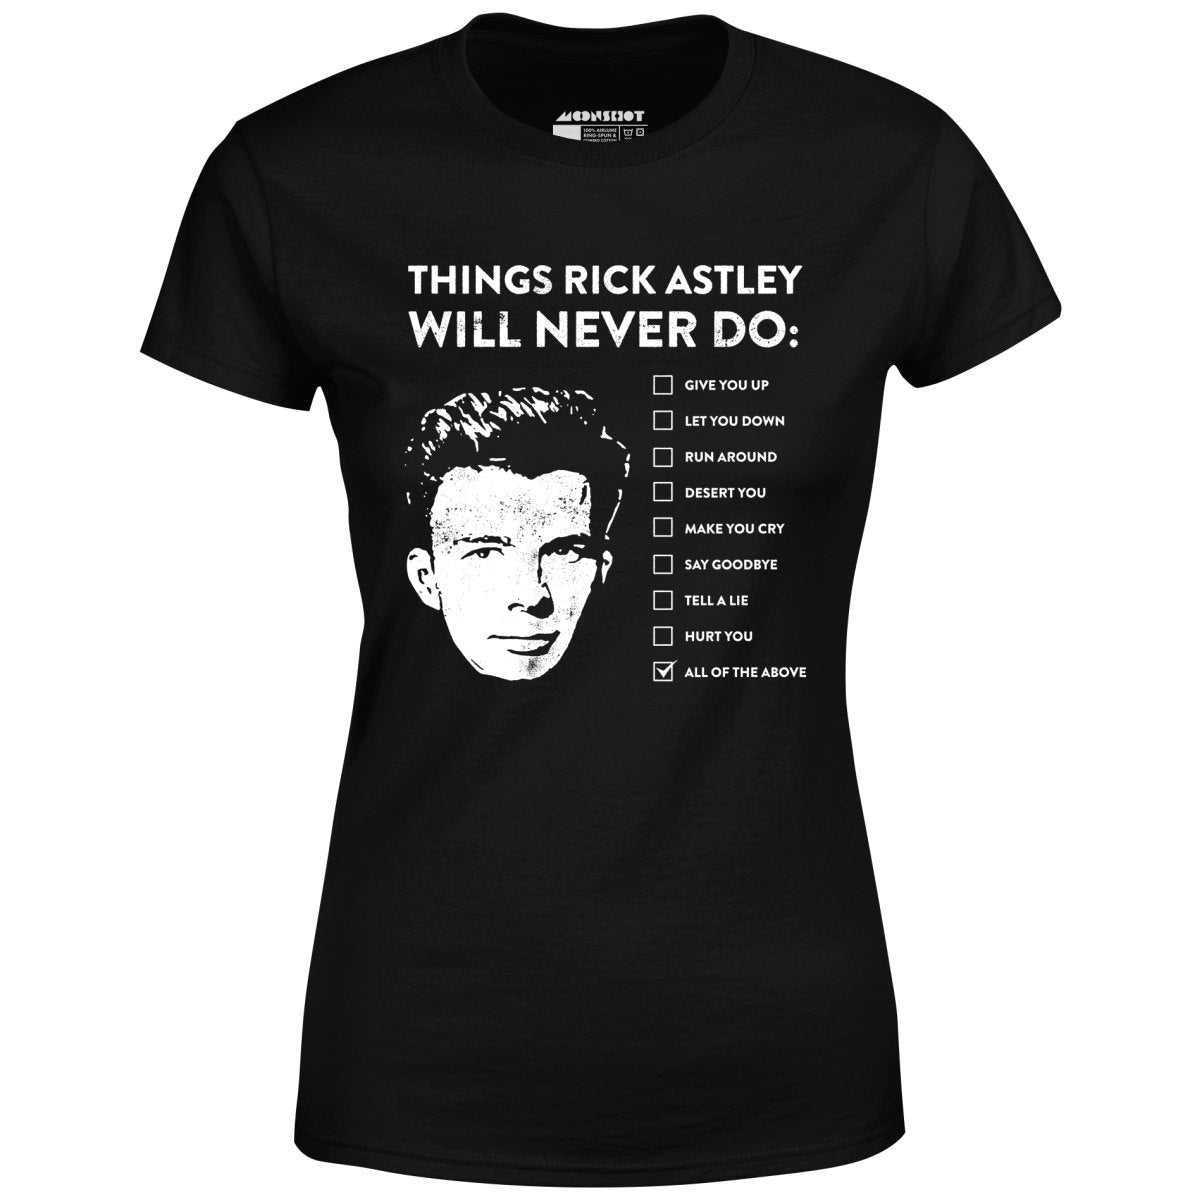 Things Rick Astley Will Never Do - Women's T-Shirt